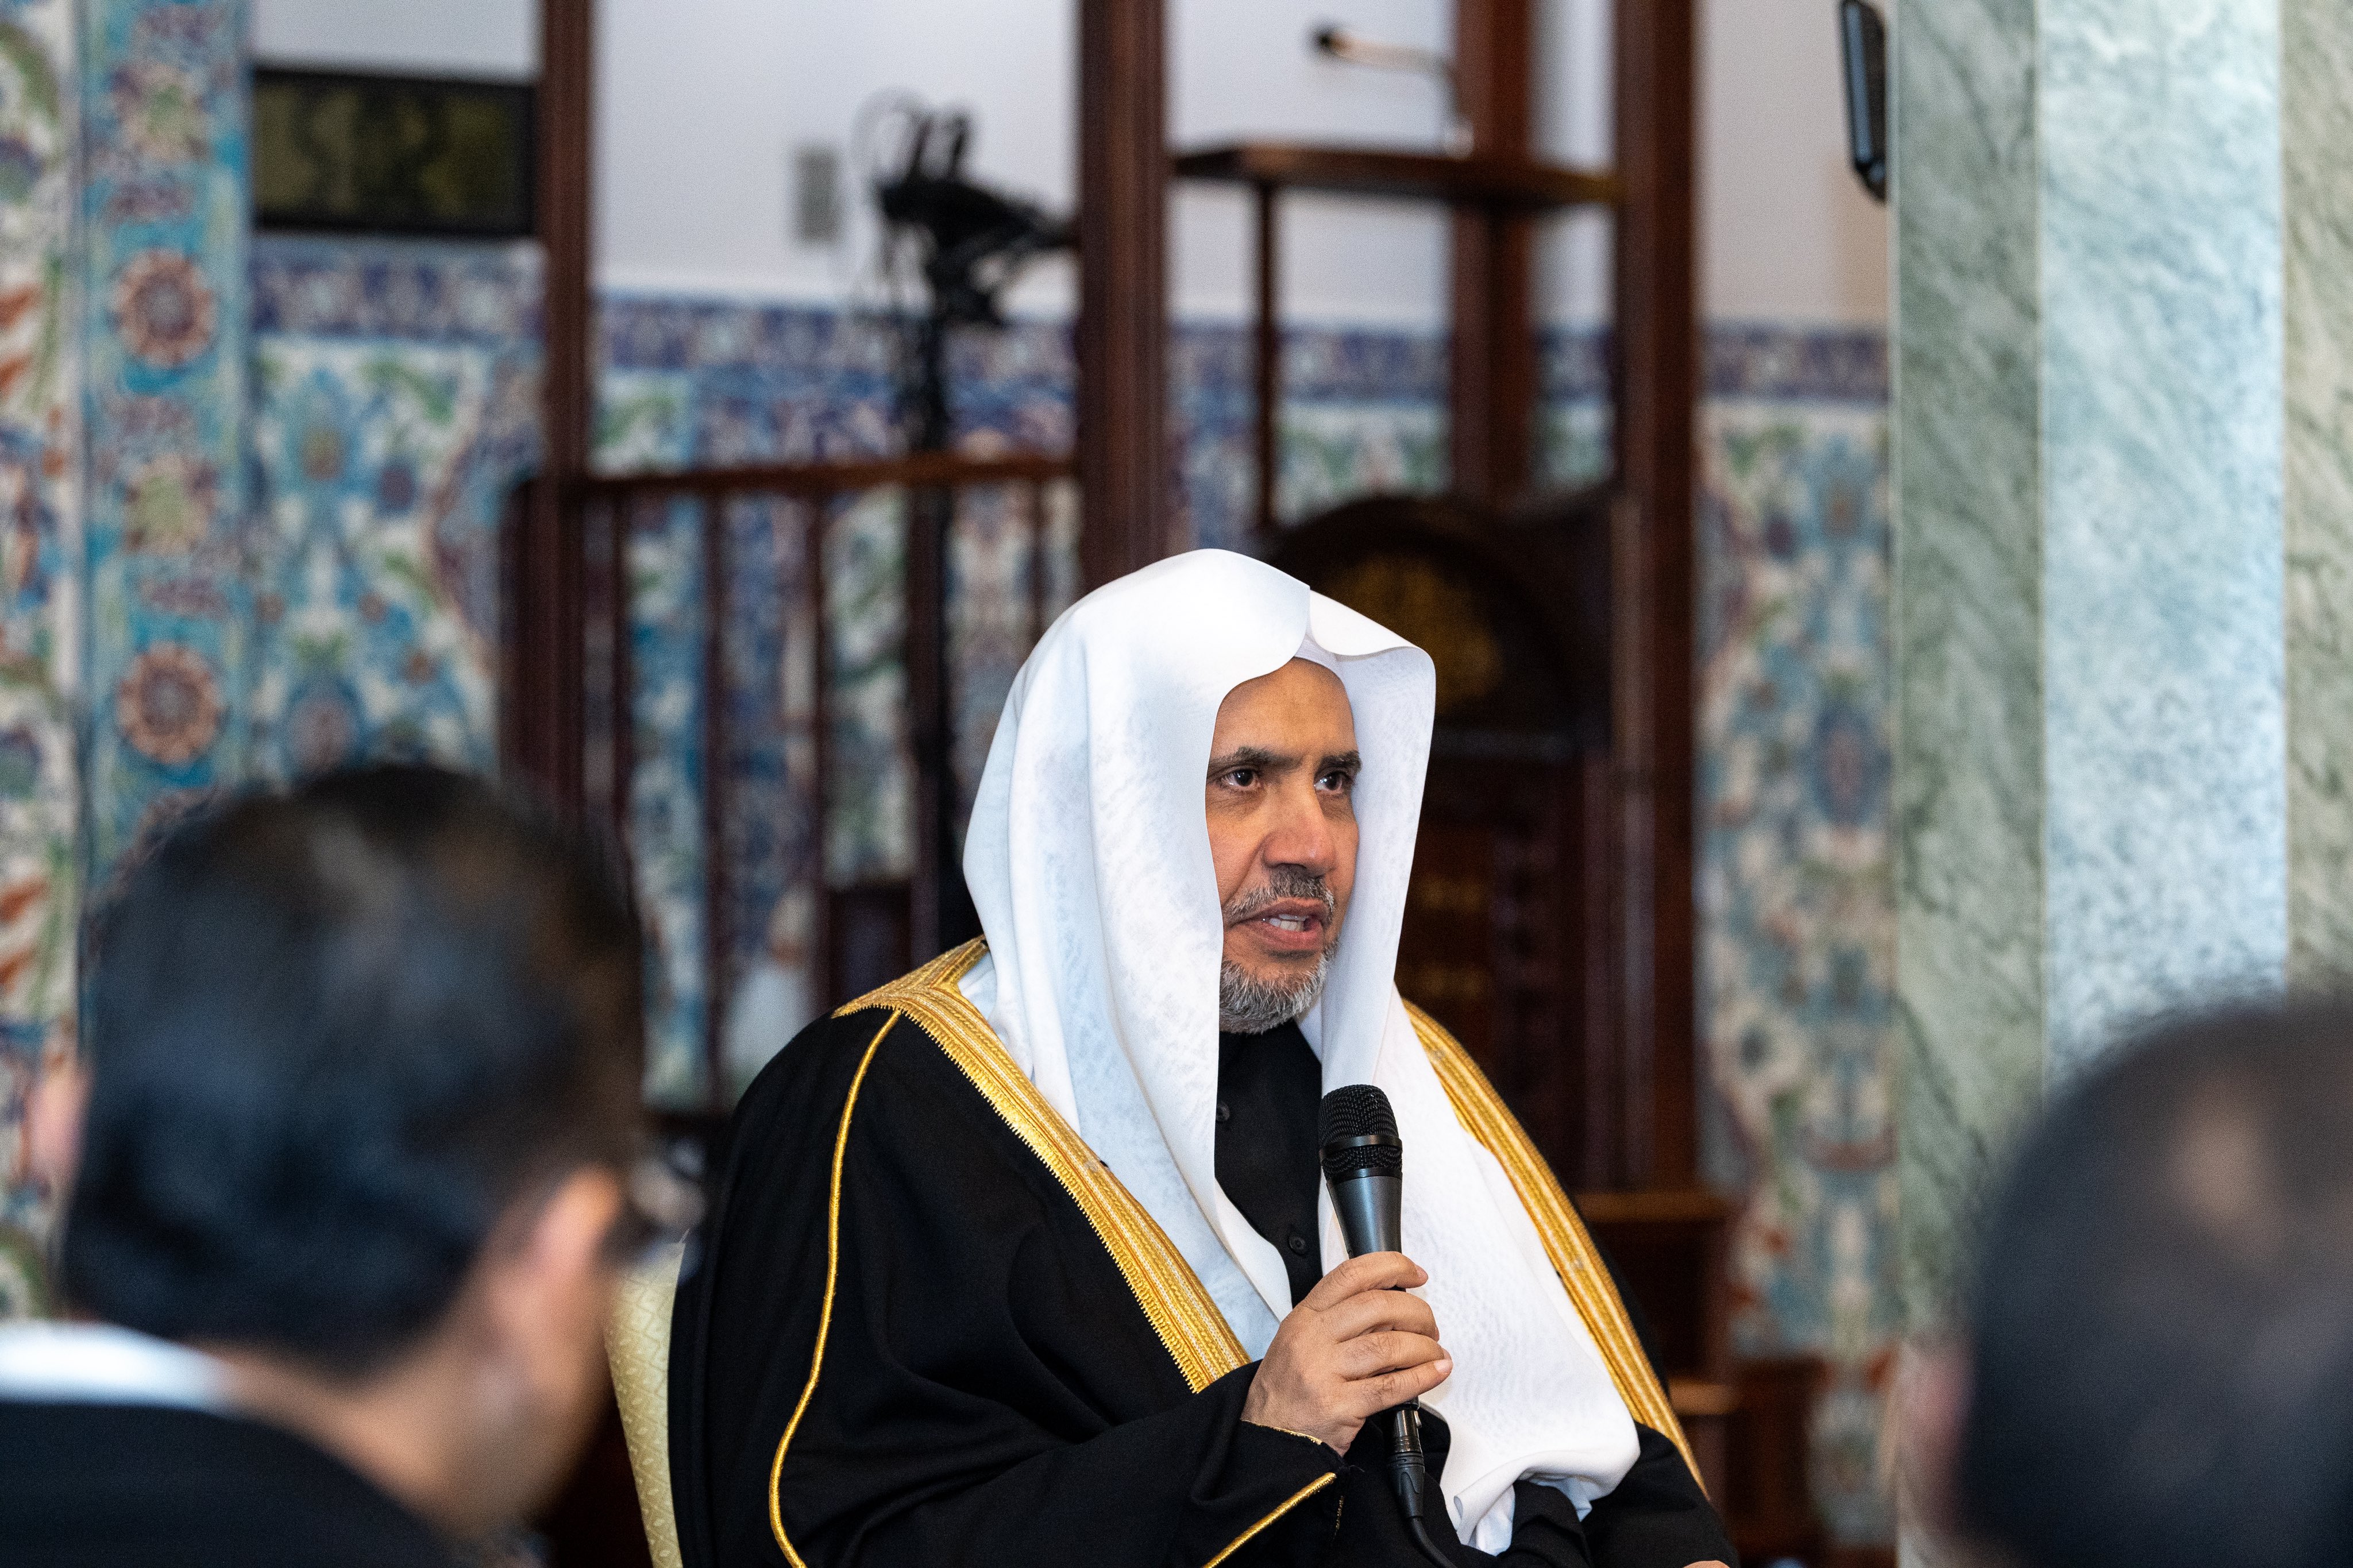 Di Islamic Center di Washington, Yang Mulia Sekretaris Jenderal LMD, Ketua Asosiasi Ulama Muslim, Syekh Dr. Mohammed Al-issa, membuka pertemuan Dewan Pendiri Kepemimpinan Islam di Amerika, baik bagian utara maupun selatan.